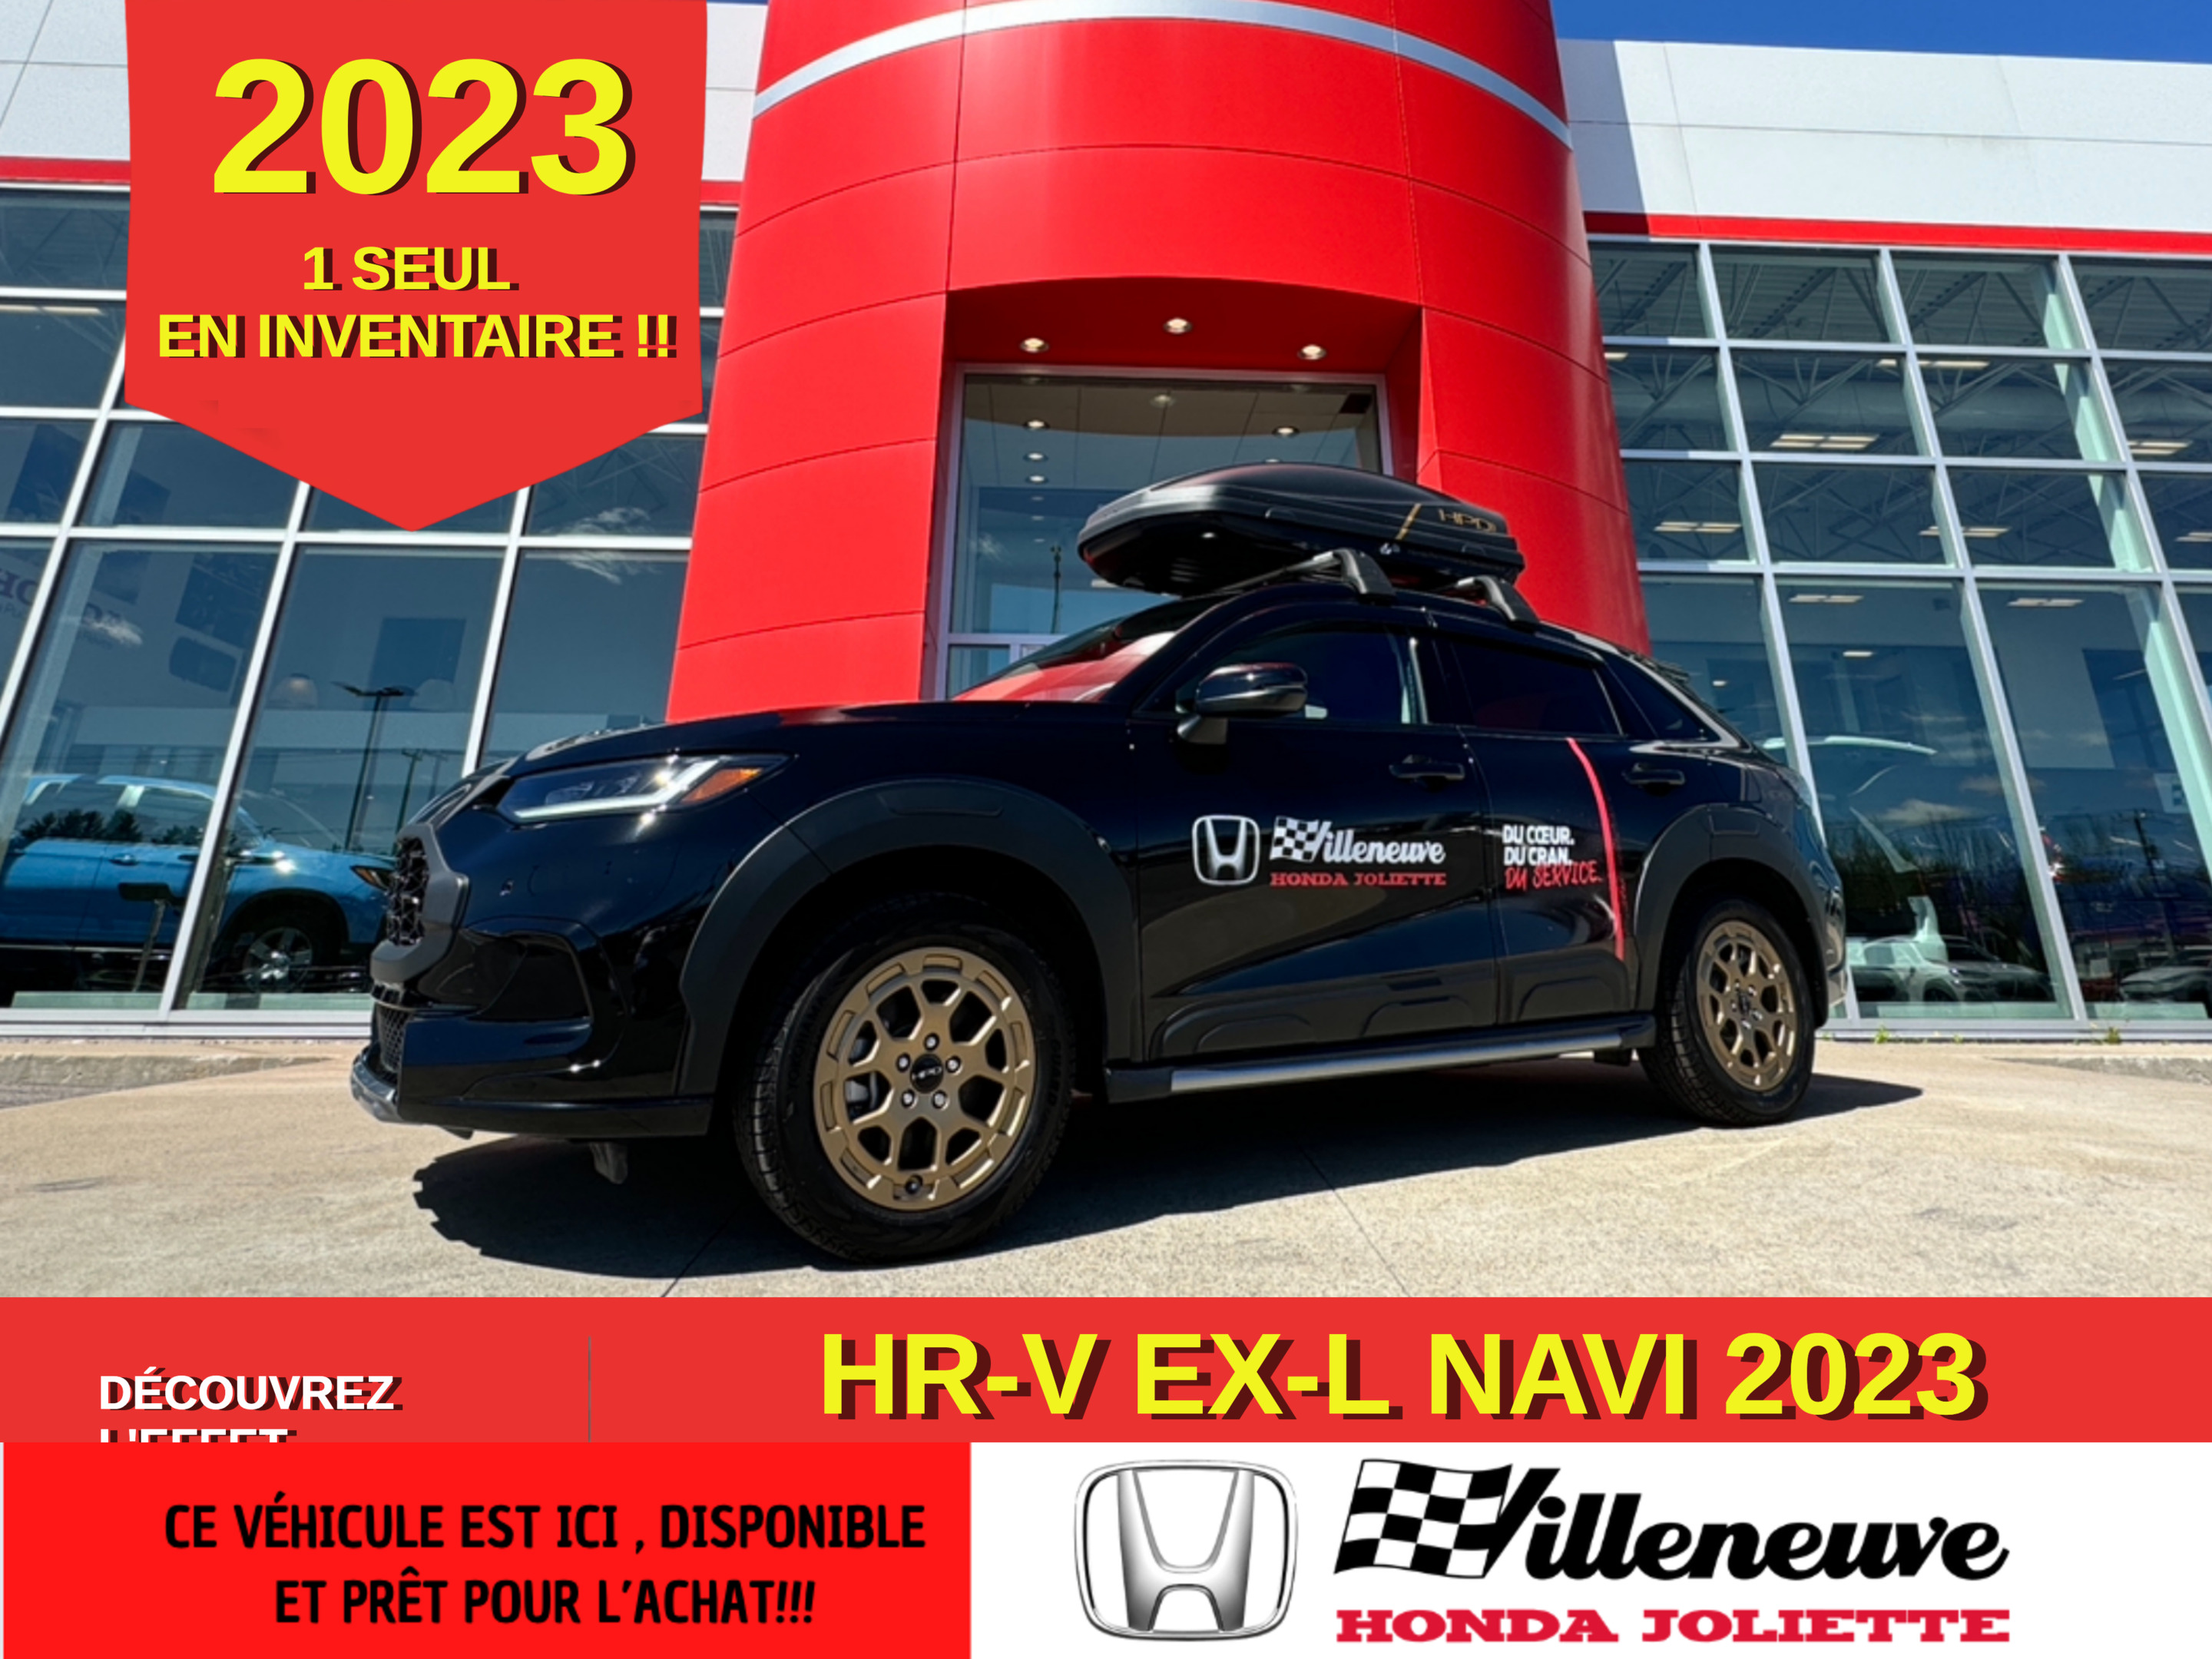 2023 Honda HR-V EX-L Navi Here and in stock !! / Le retour des pet